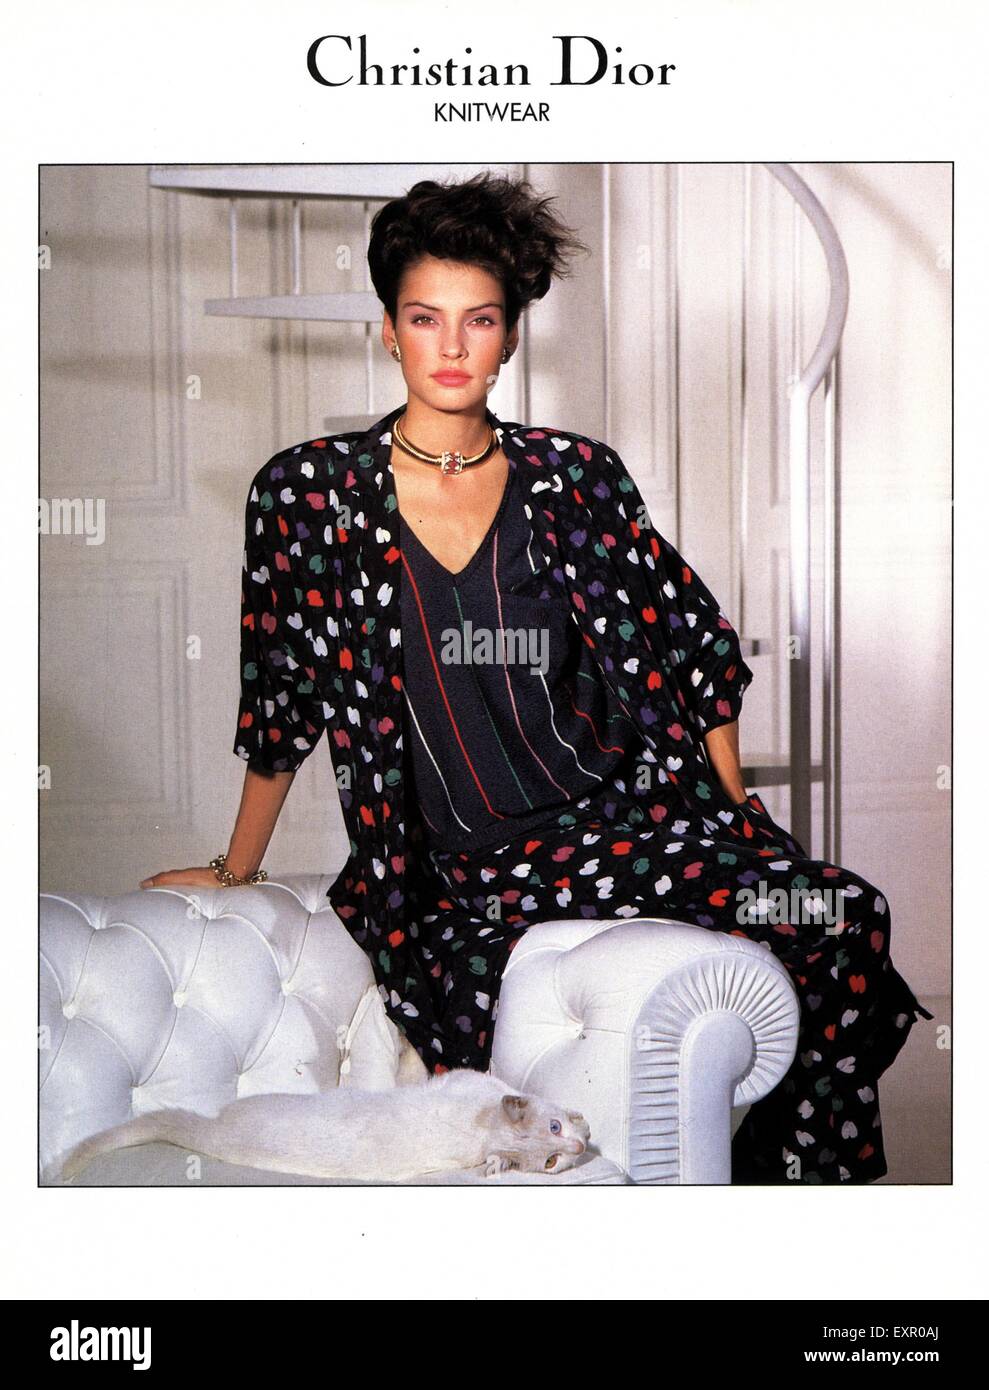 1980s UK Christian Dior Magazine Advert Stock Photo